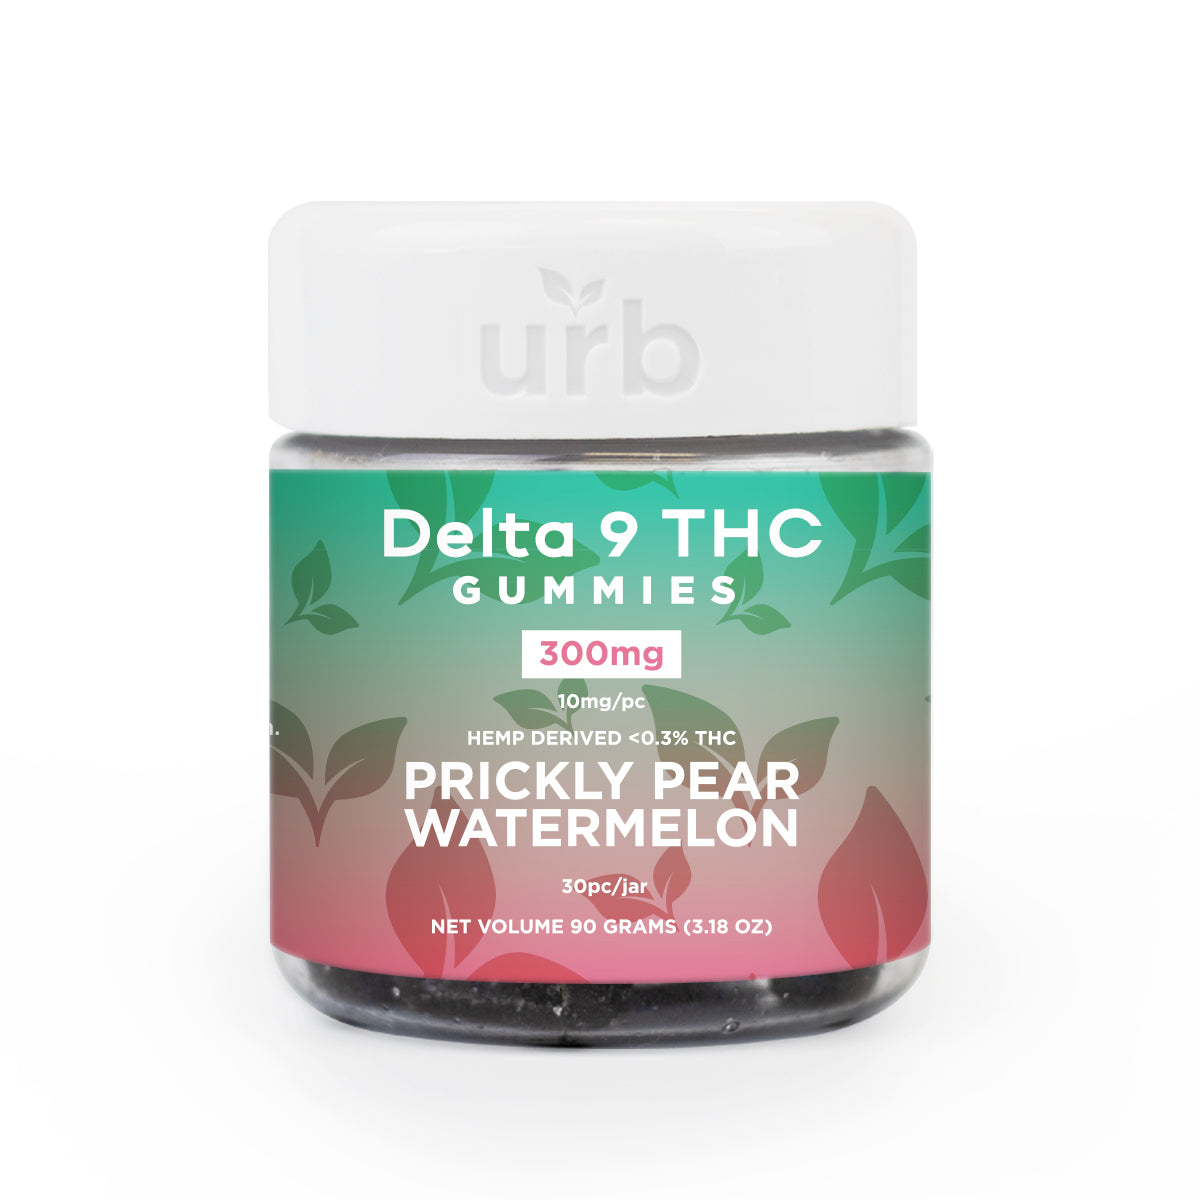 Delta 9 THC Gummy Prickly Pear Watermelon